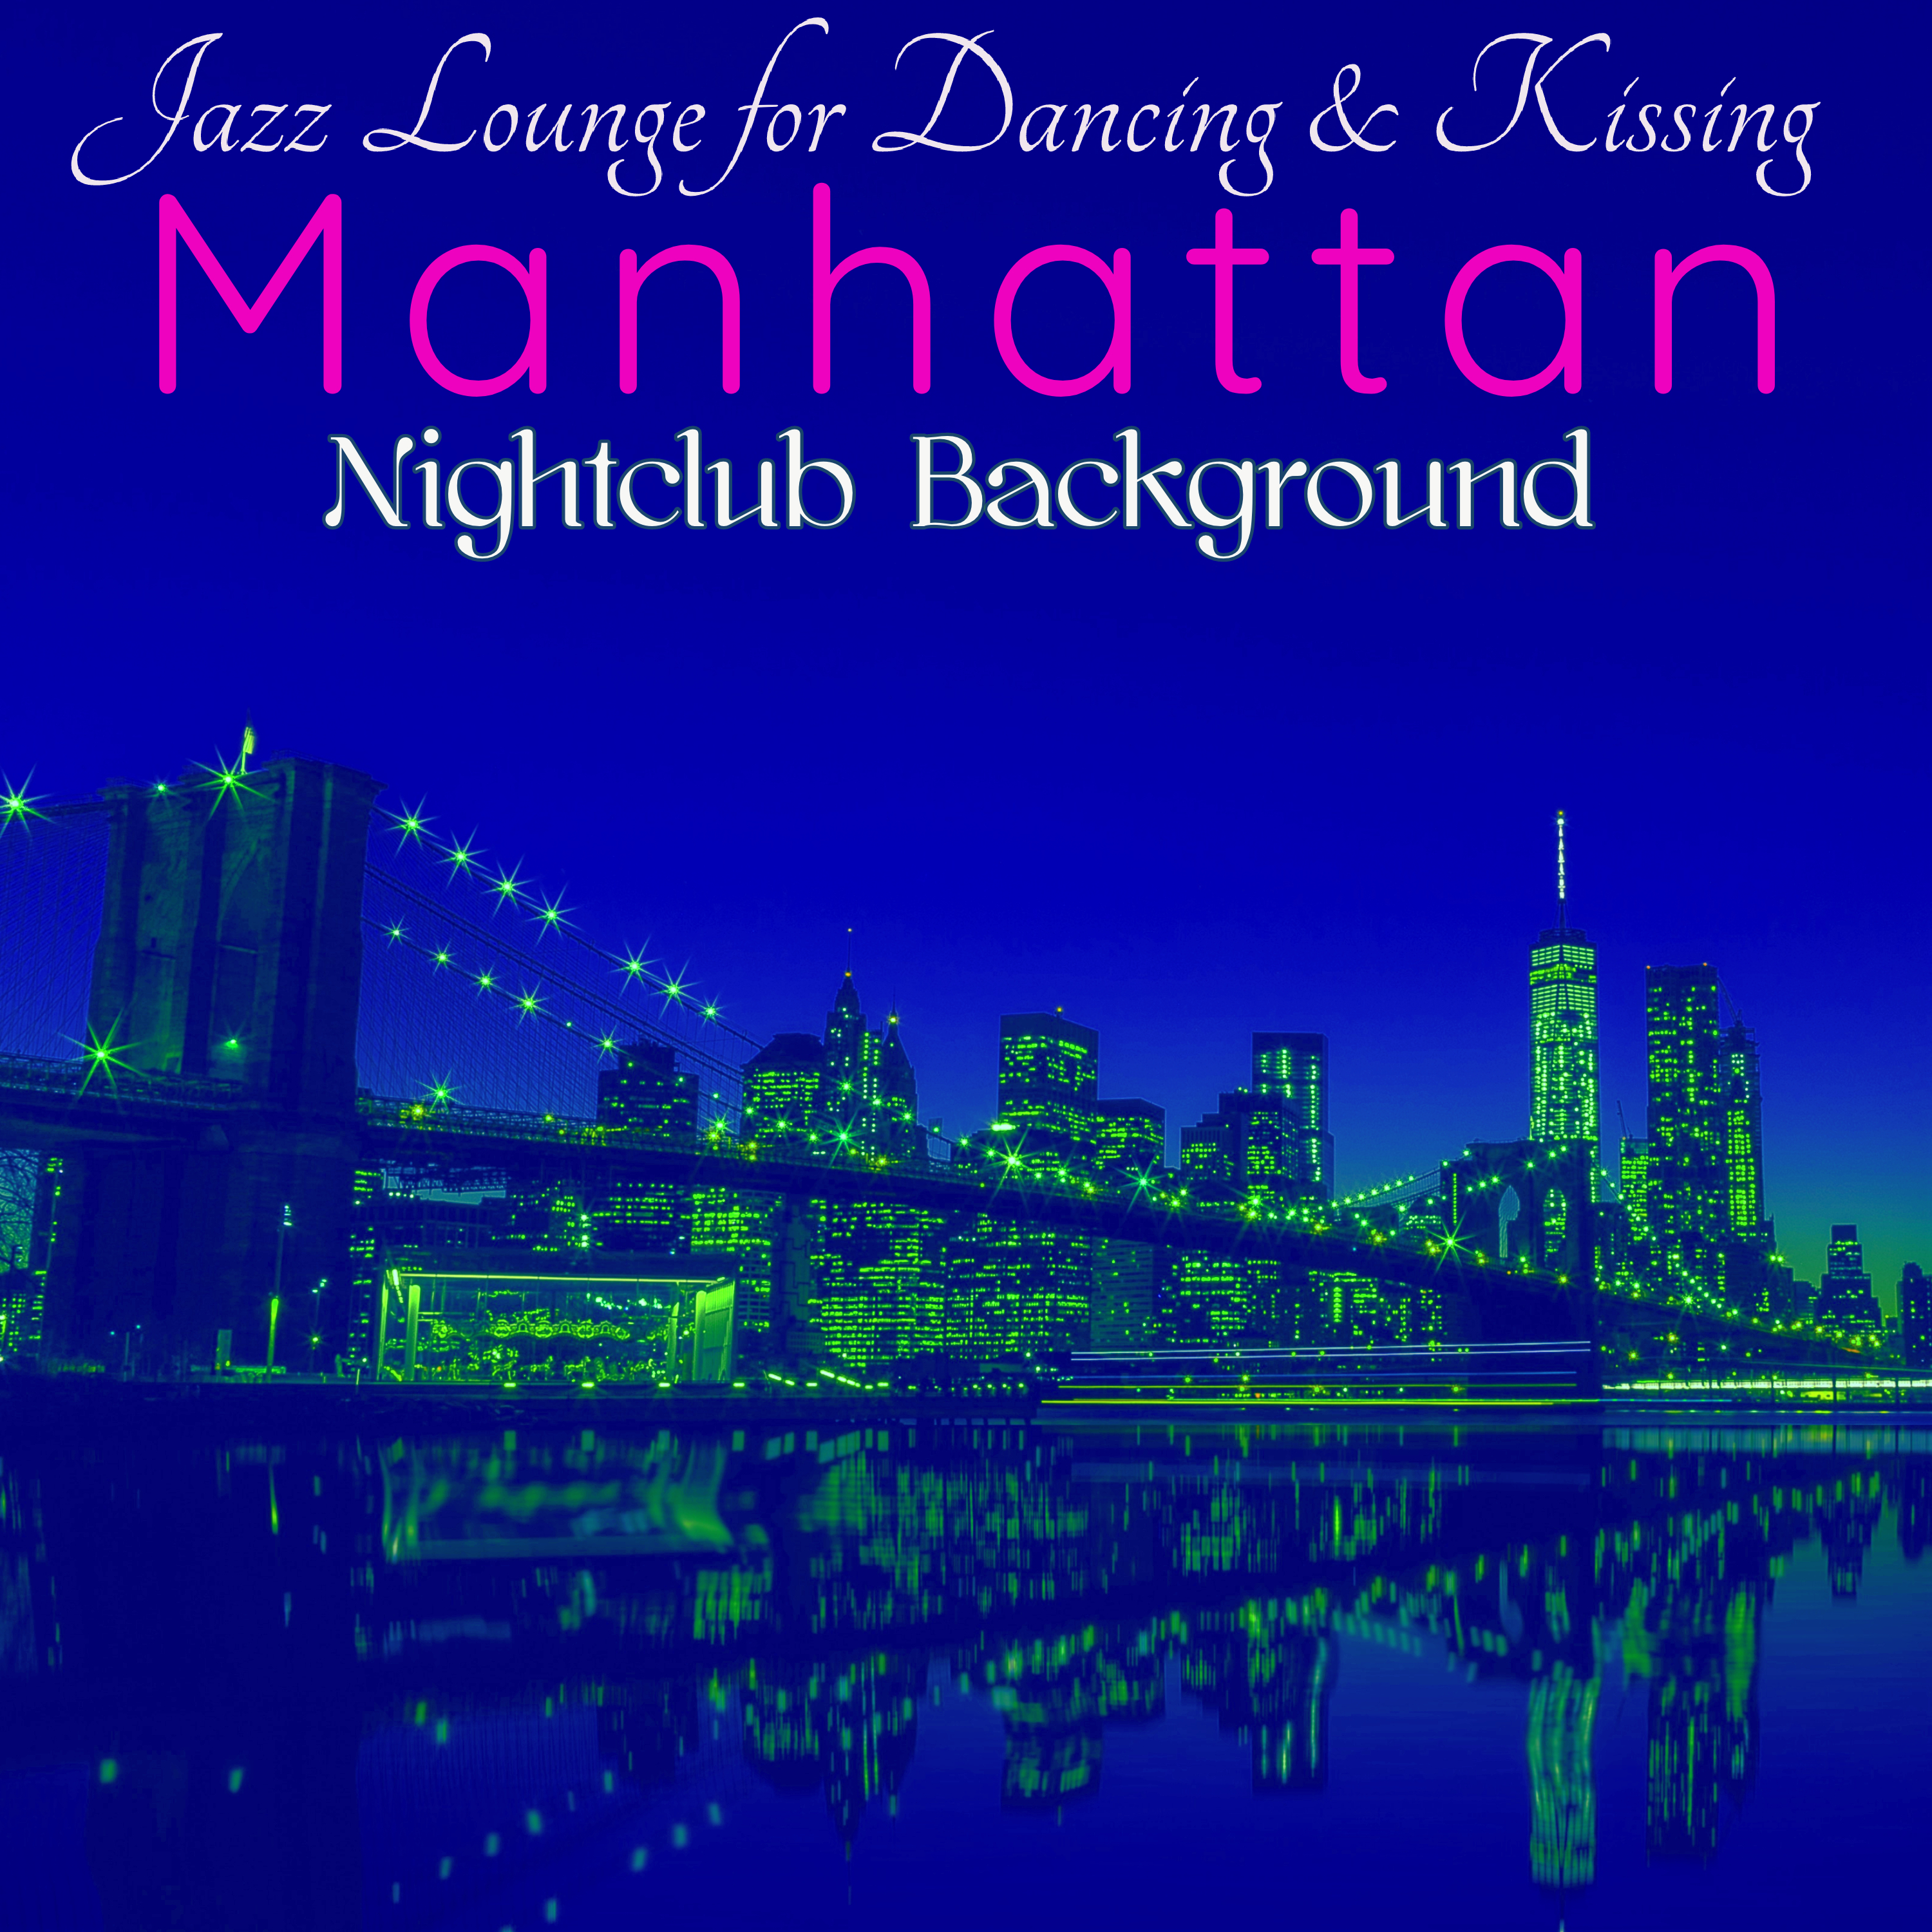 Manhattan Nightclub Background – Jazz Lounge for Dancing & Kissing